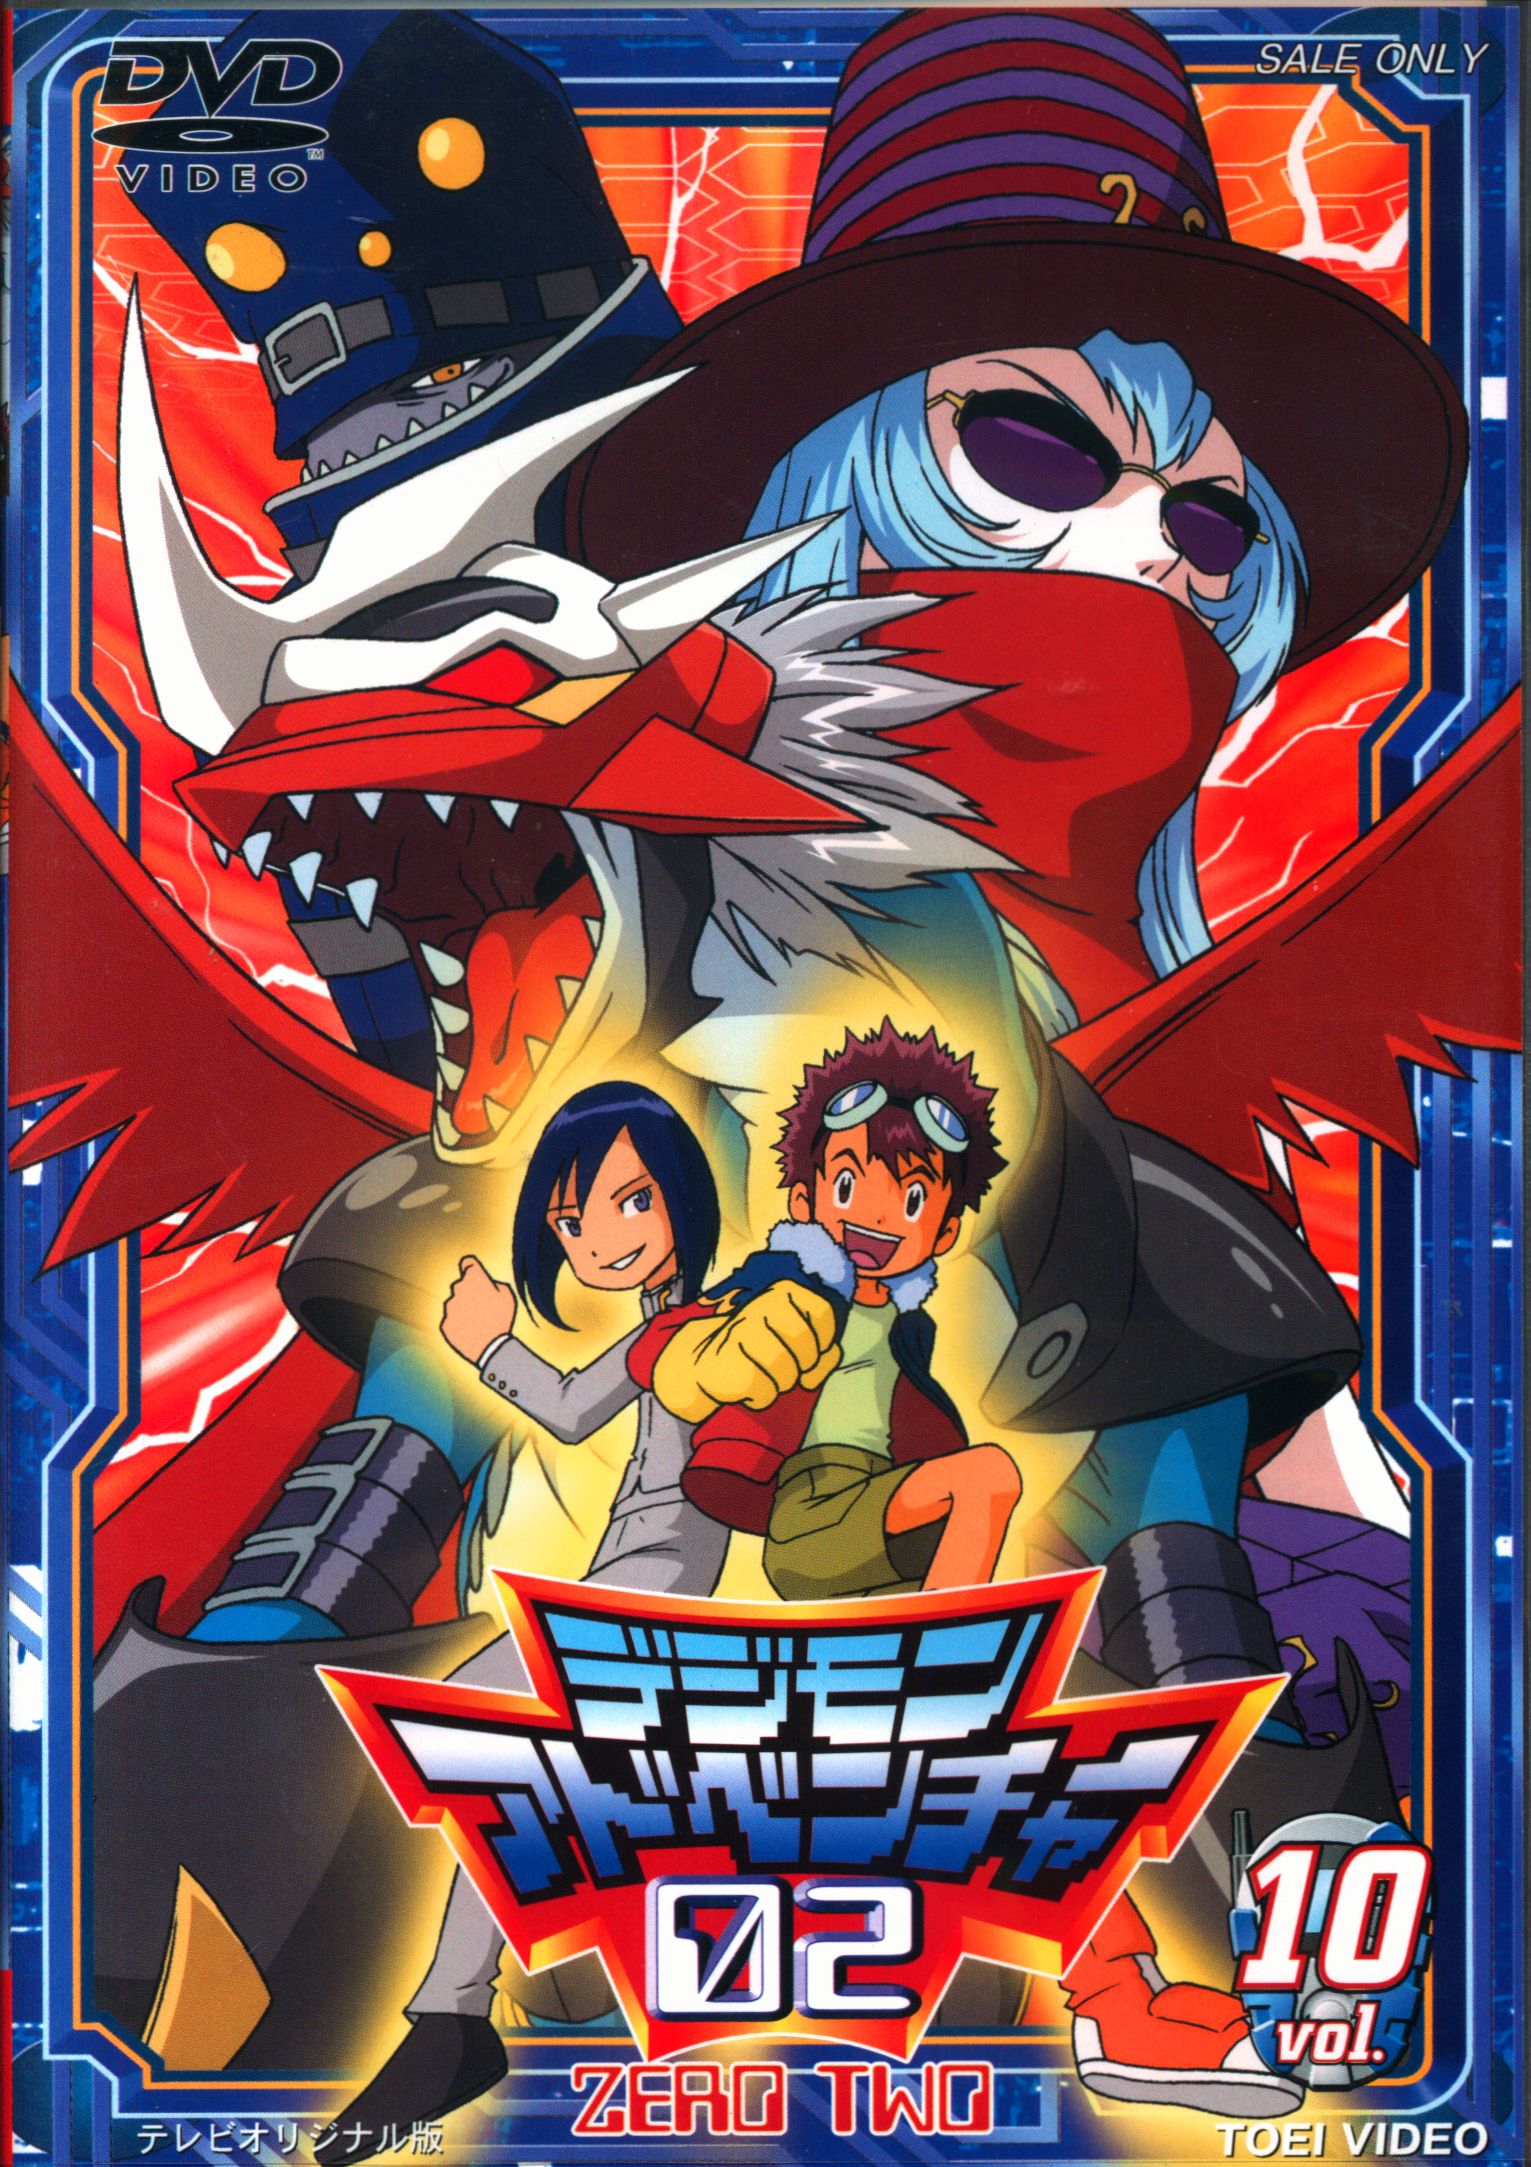 Digimon Adventure 02 [DVD]